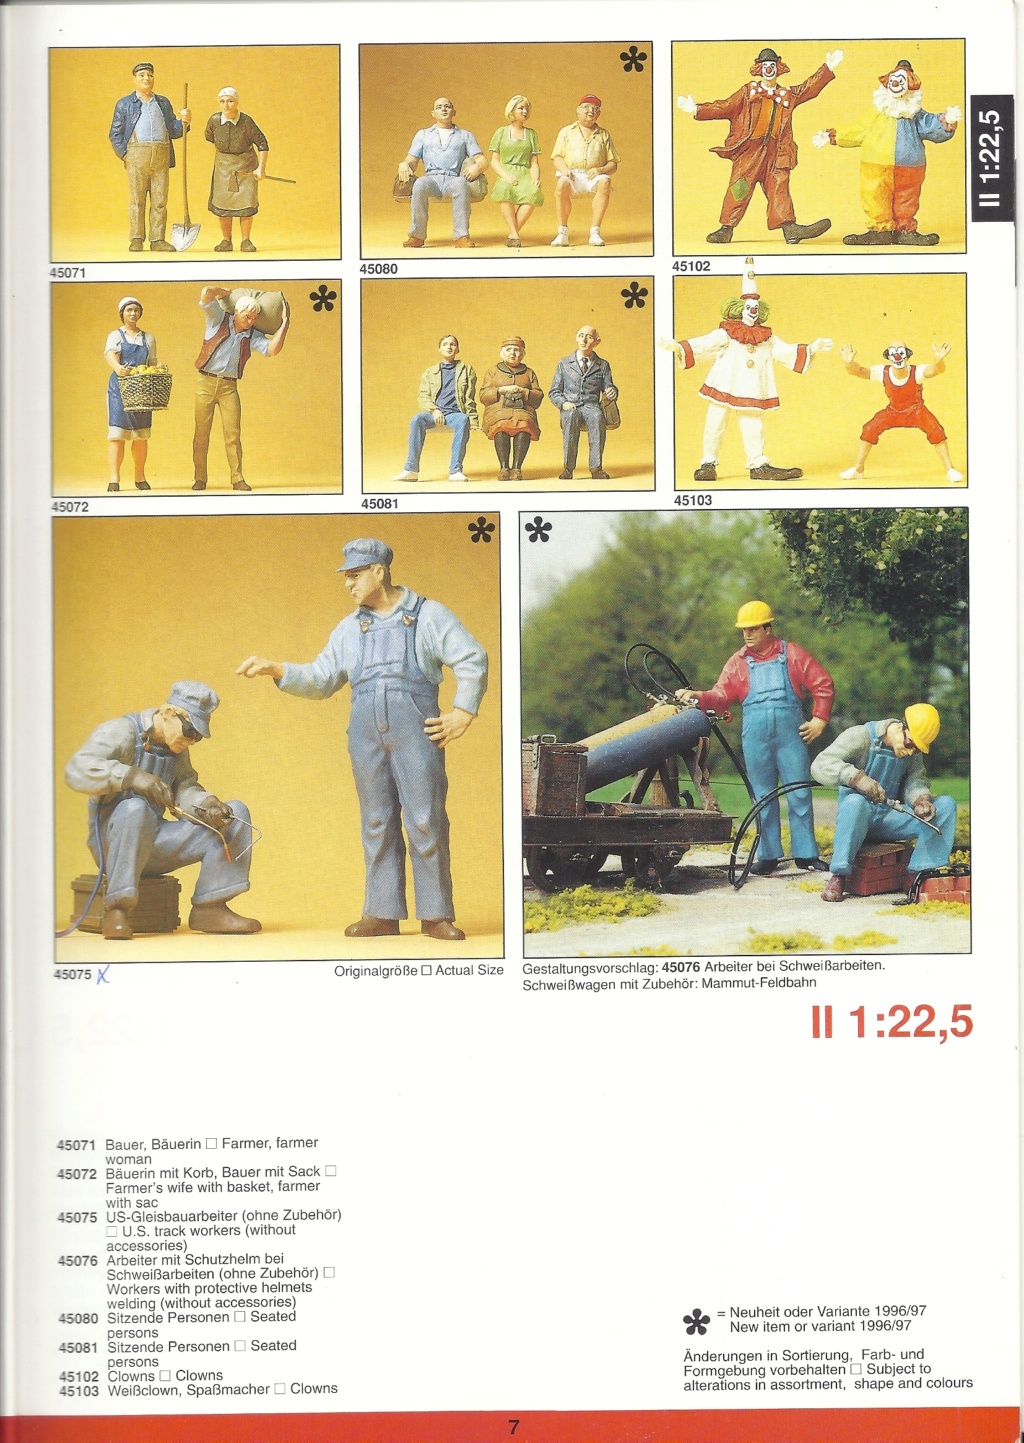 [PREISER 1996] Catalogue elastolin 1996 Preis147